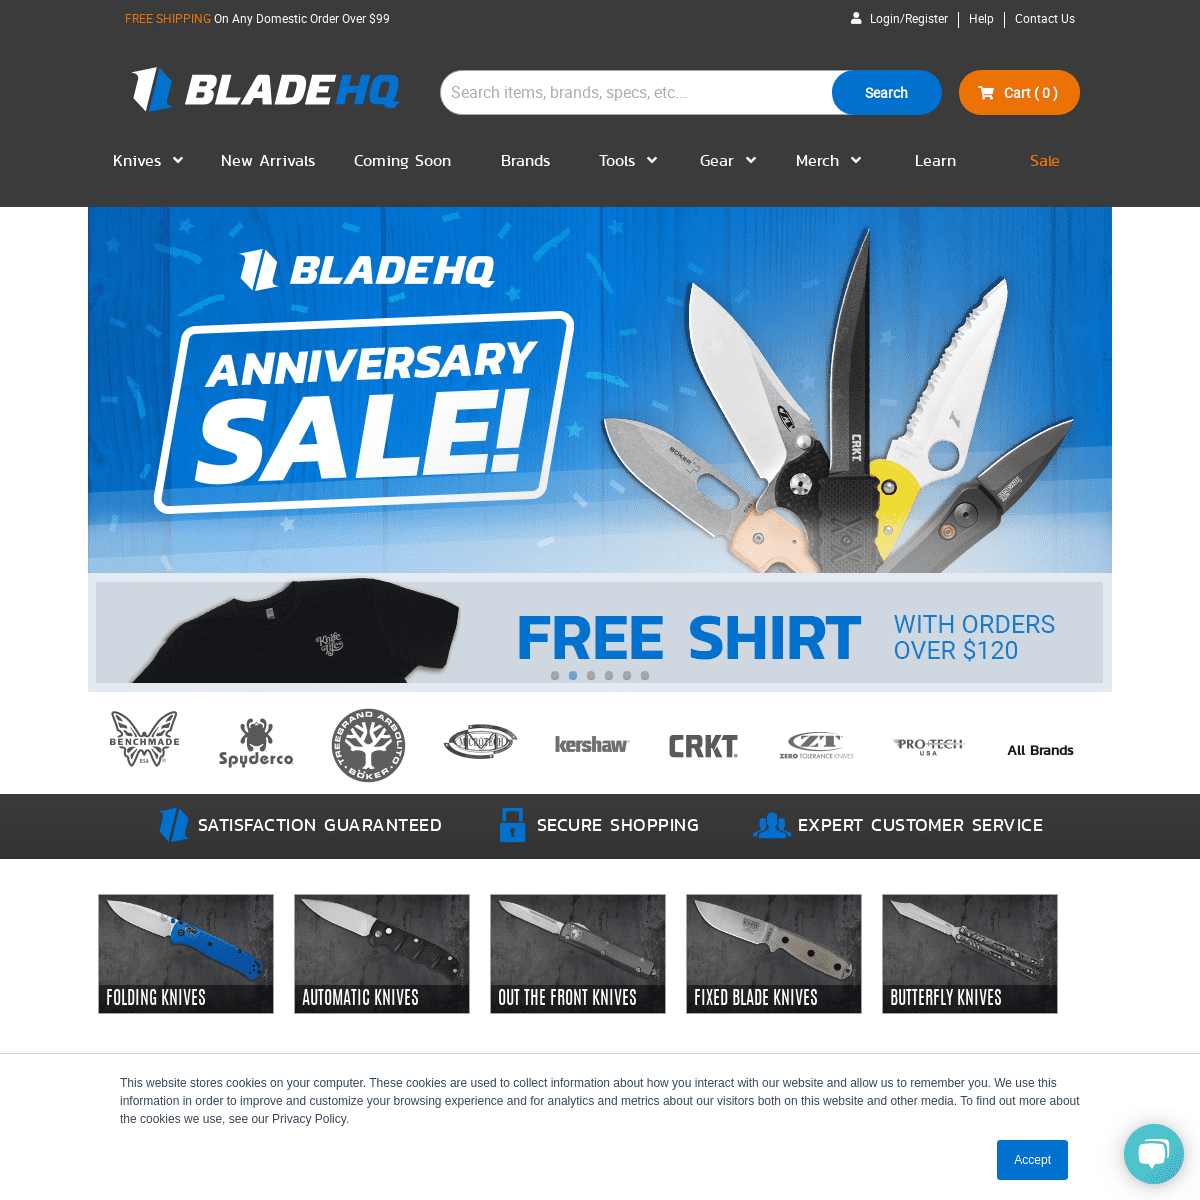 A complete backup of bladehq.com